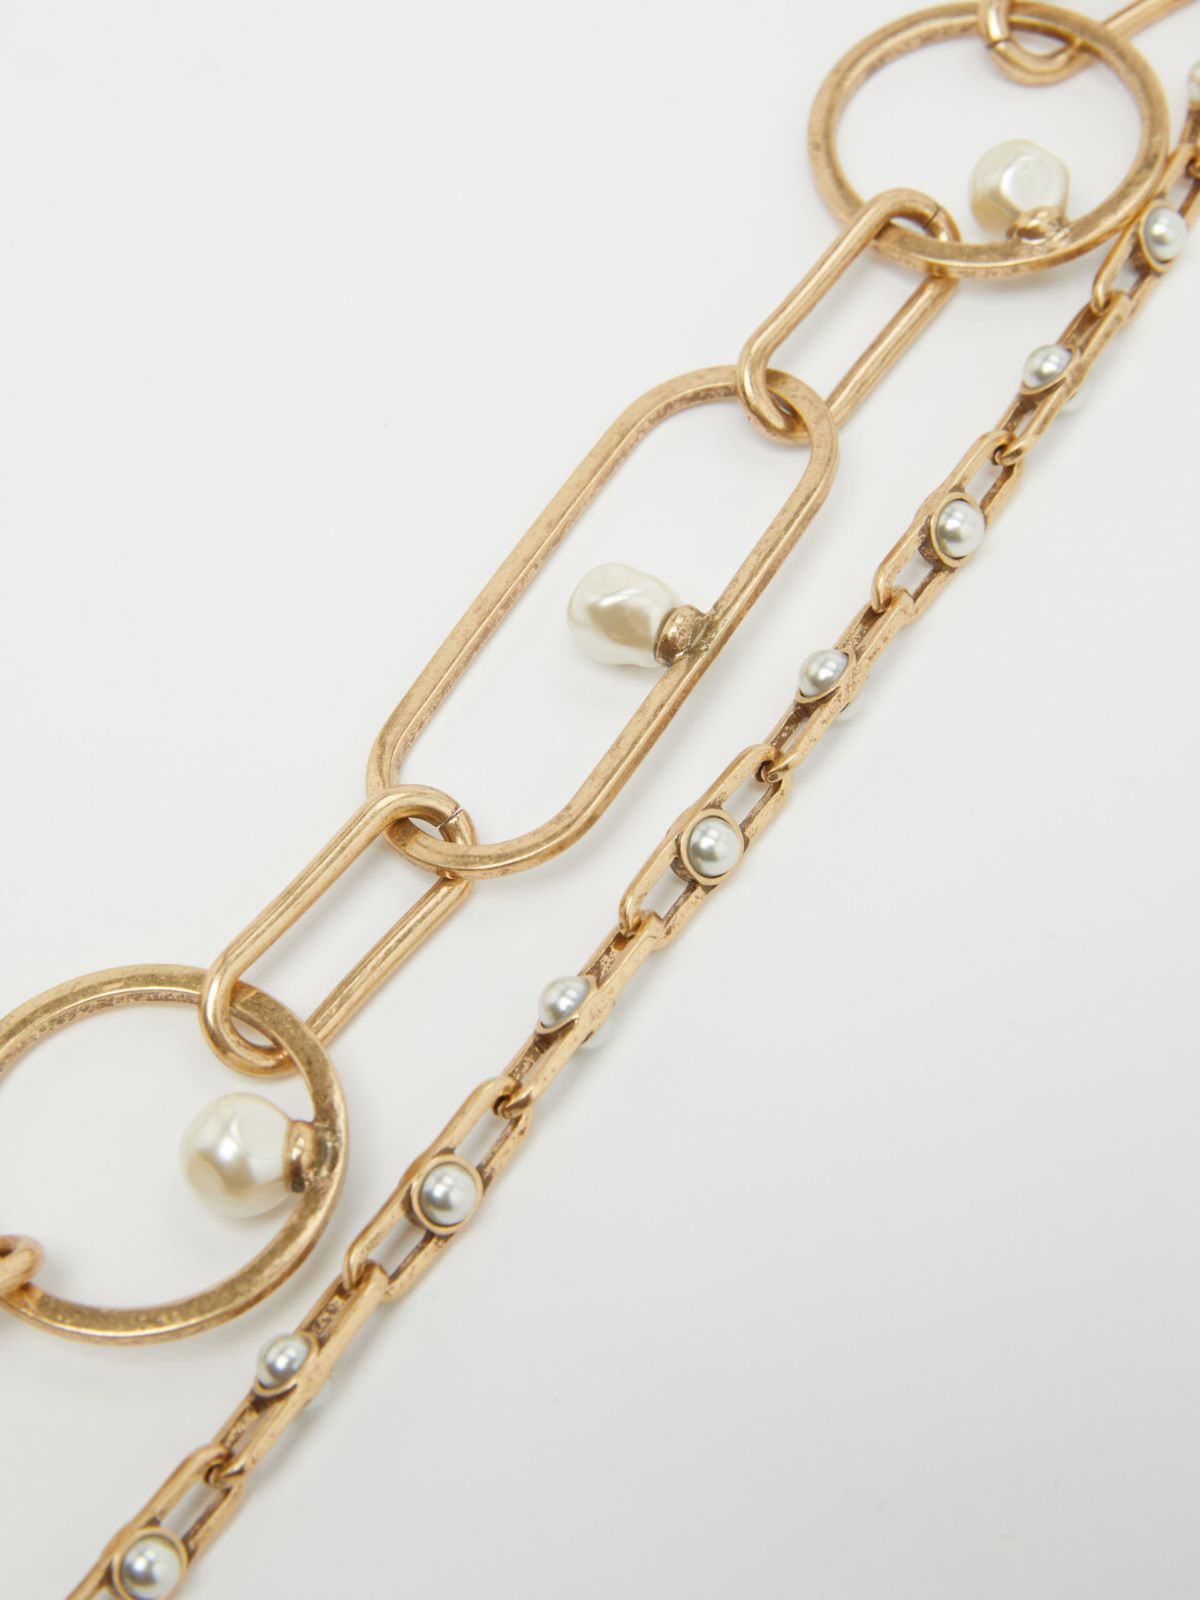 Geometric chain necklaces  Weekend Maxmara